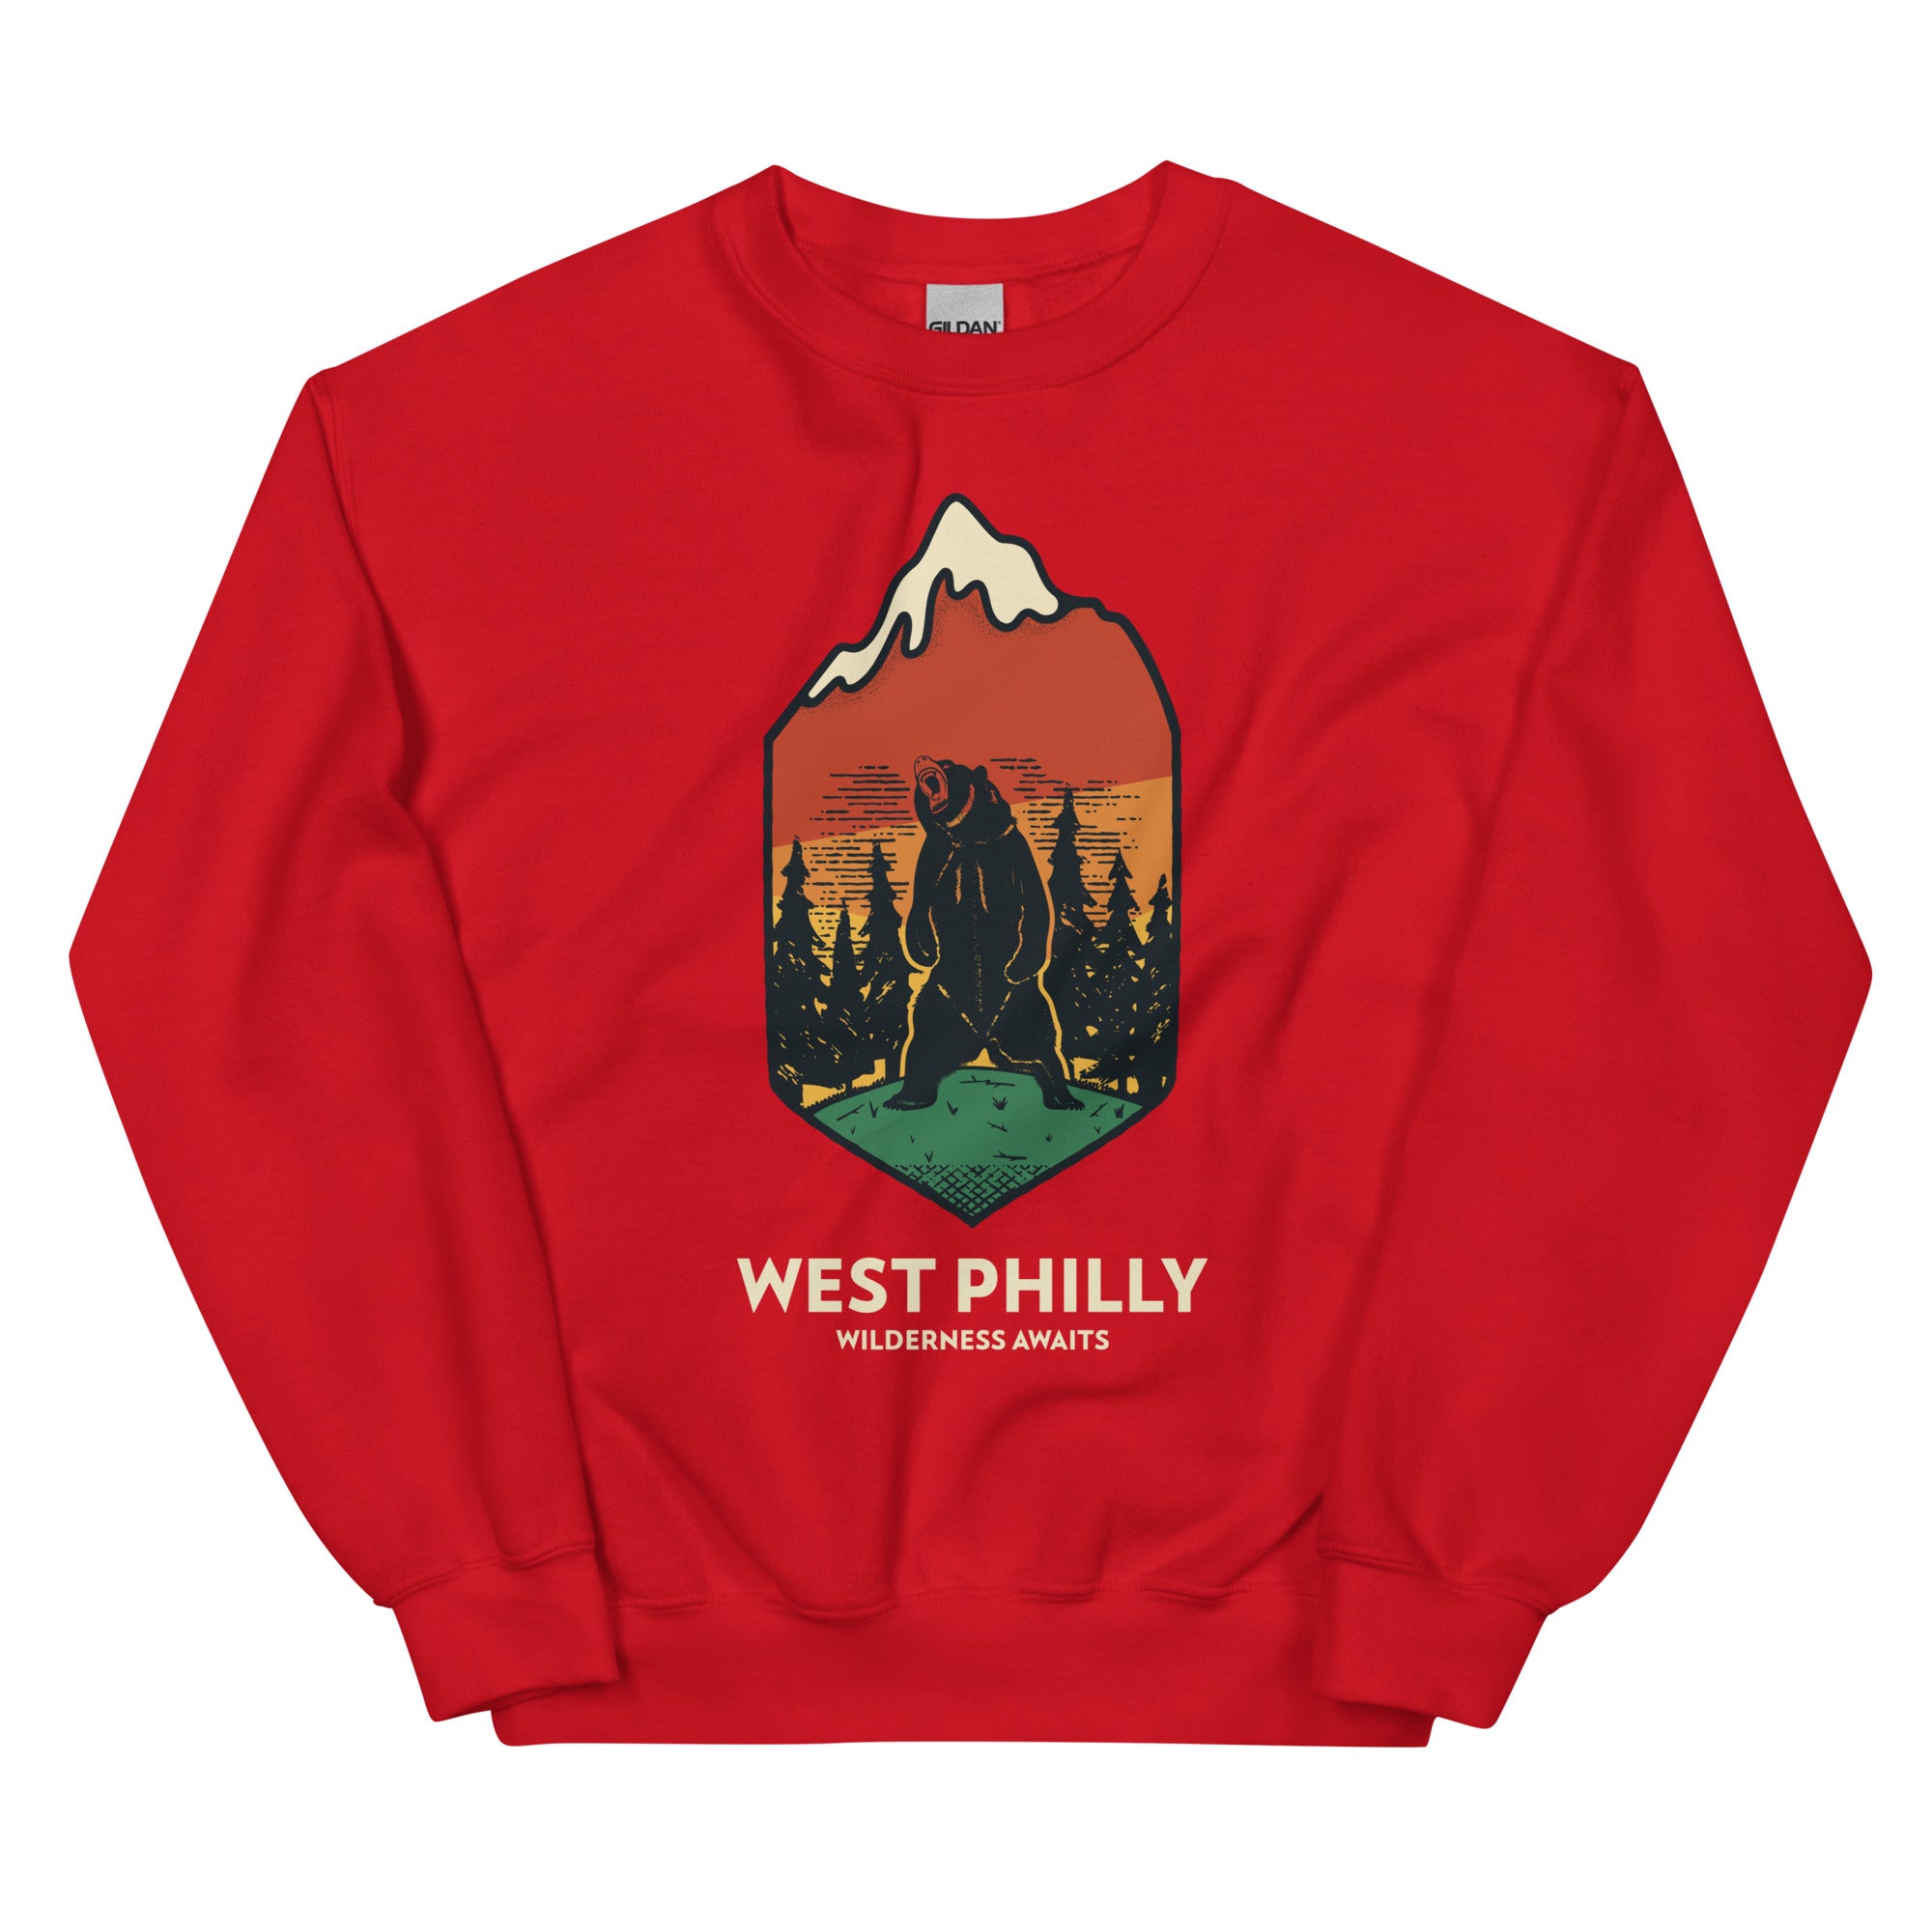 West Philly Wilderness Philadelphia outdoors red sweatshirt Phillygoat